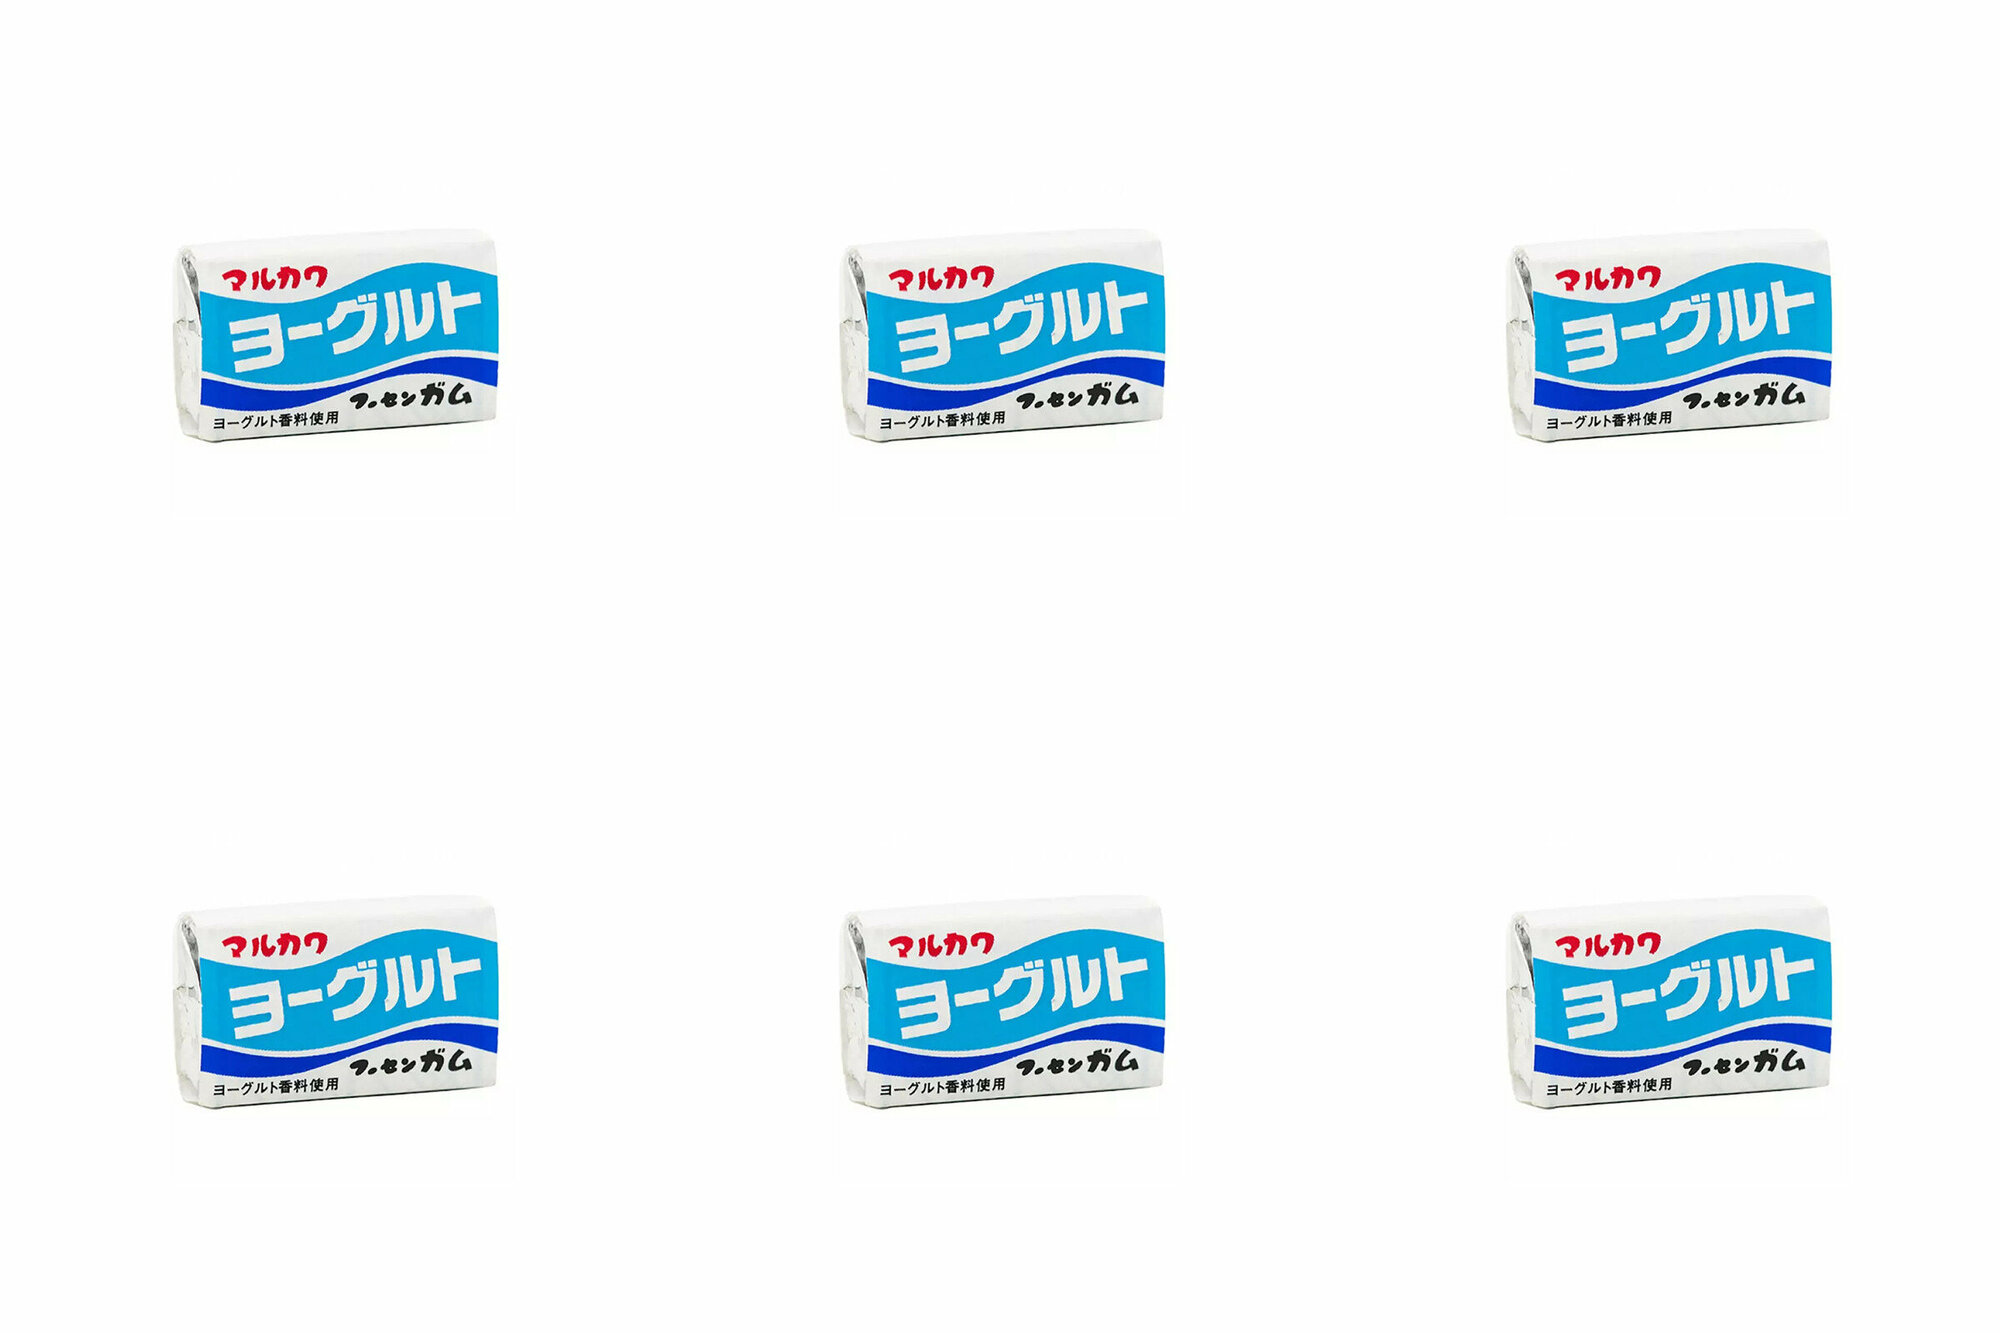 Marukawa Жевательная резинка Йогурт, 5,5 гр, 6 шт